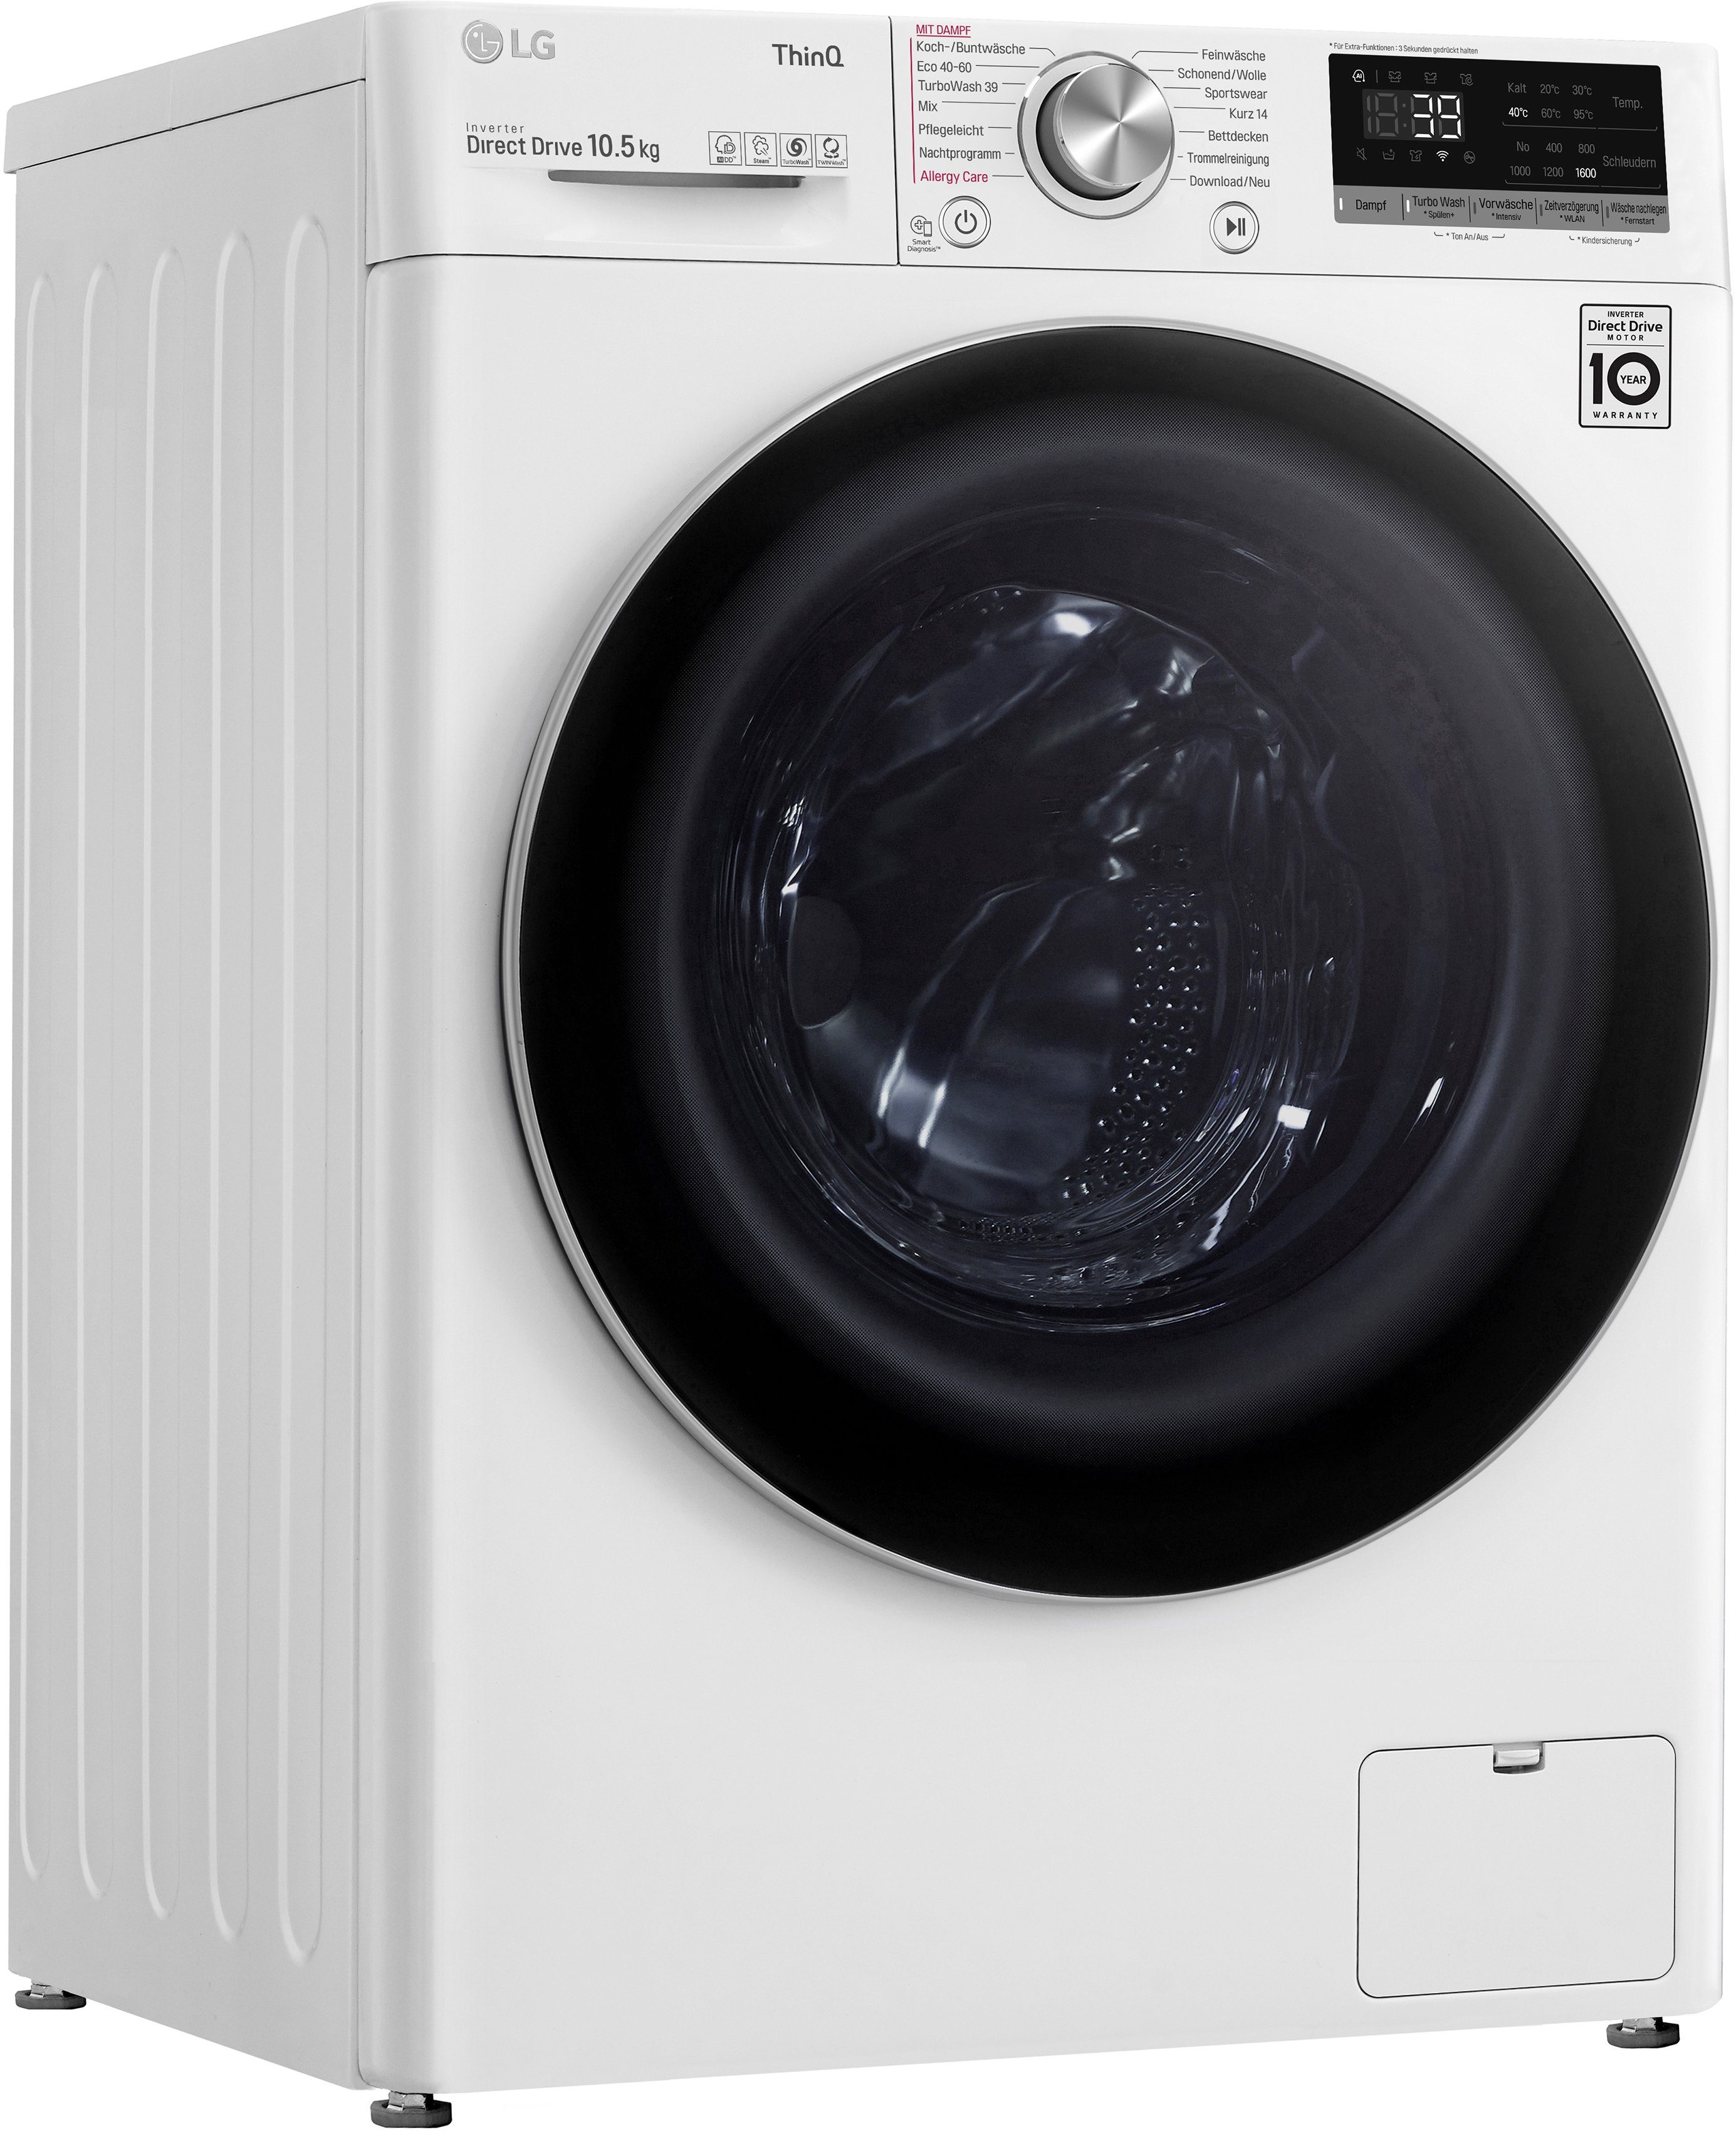 LG Waschmaschine F6WV710P1, 10,5 kg, 1600 U/min | OTTO